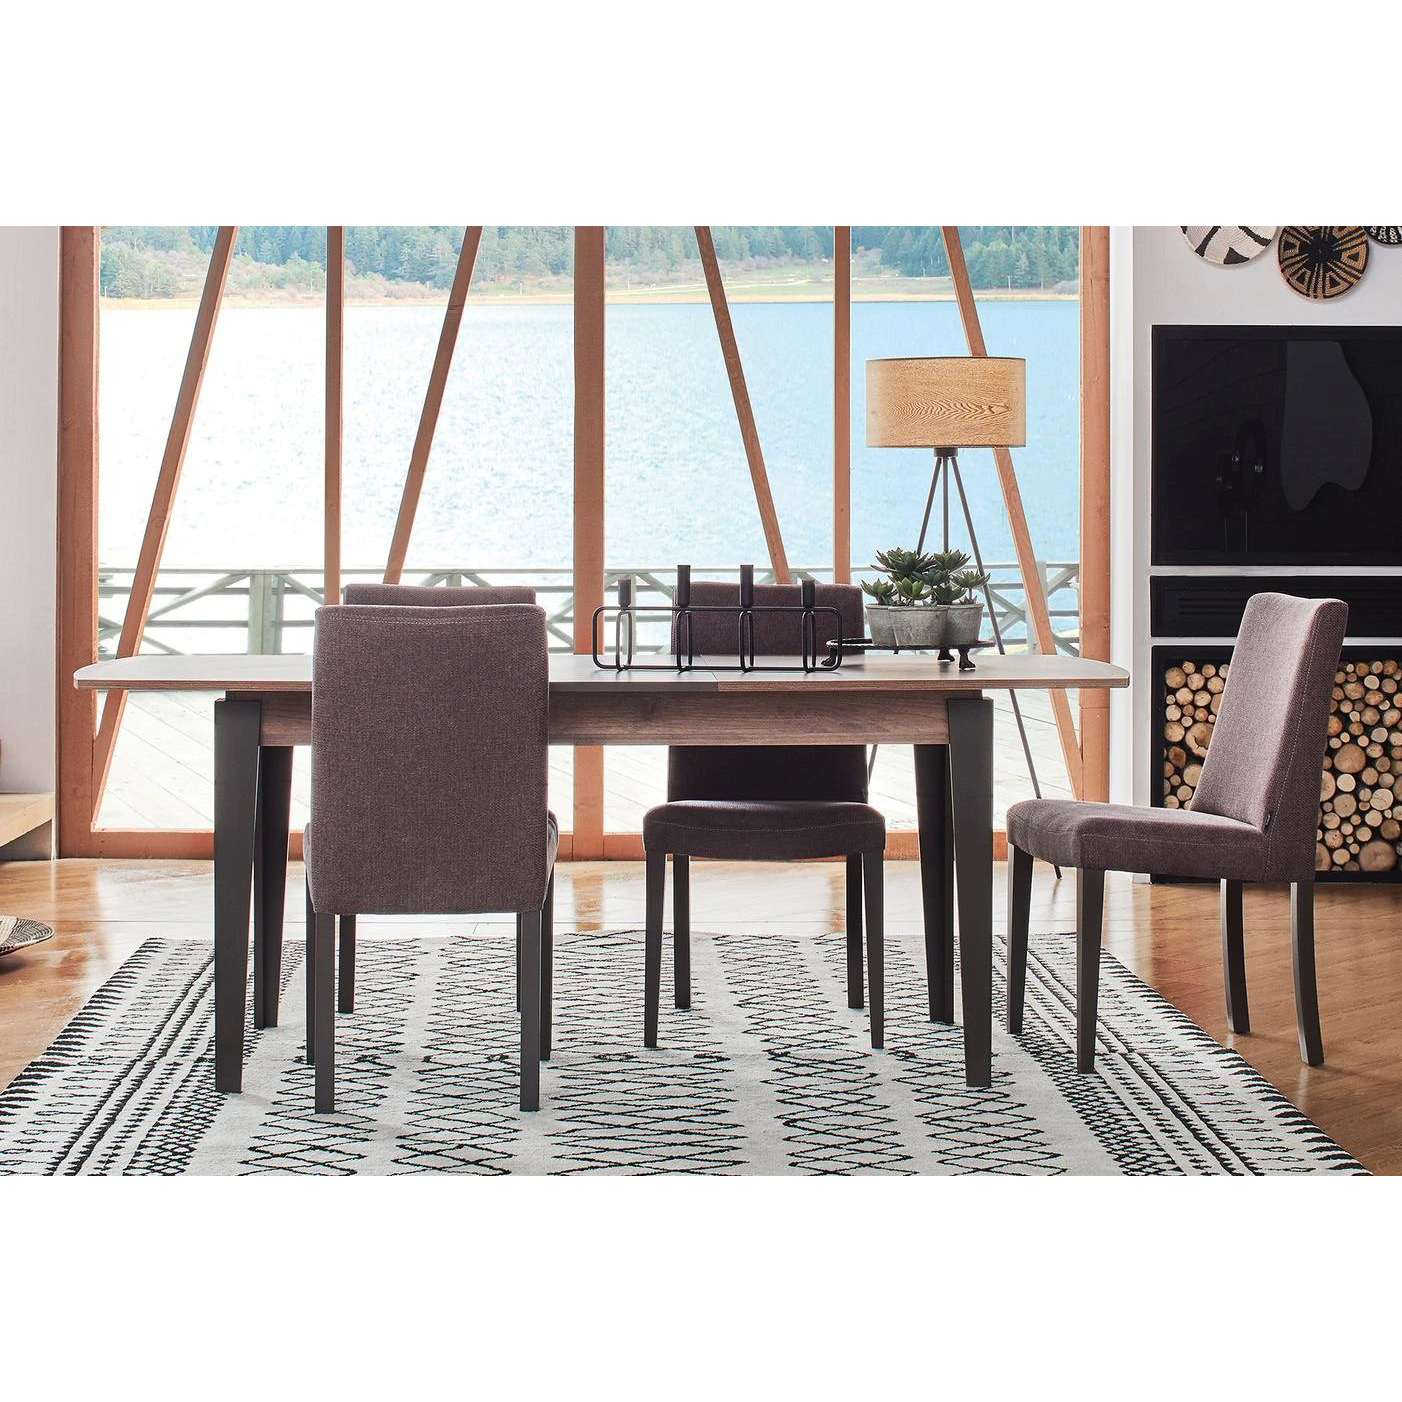 Стол обеденный Enza Home Orlando, раскладной, размер 160(200)х90х76 см (EH20225)EH20225